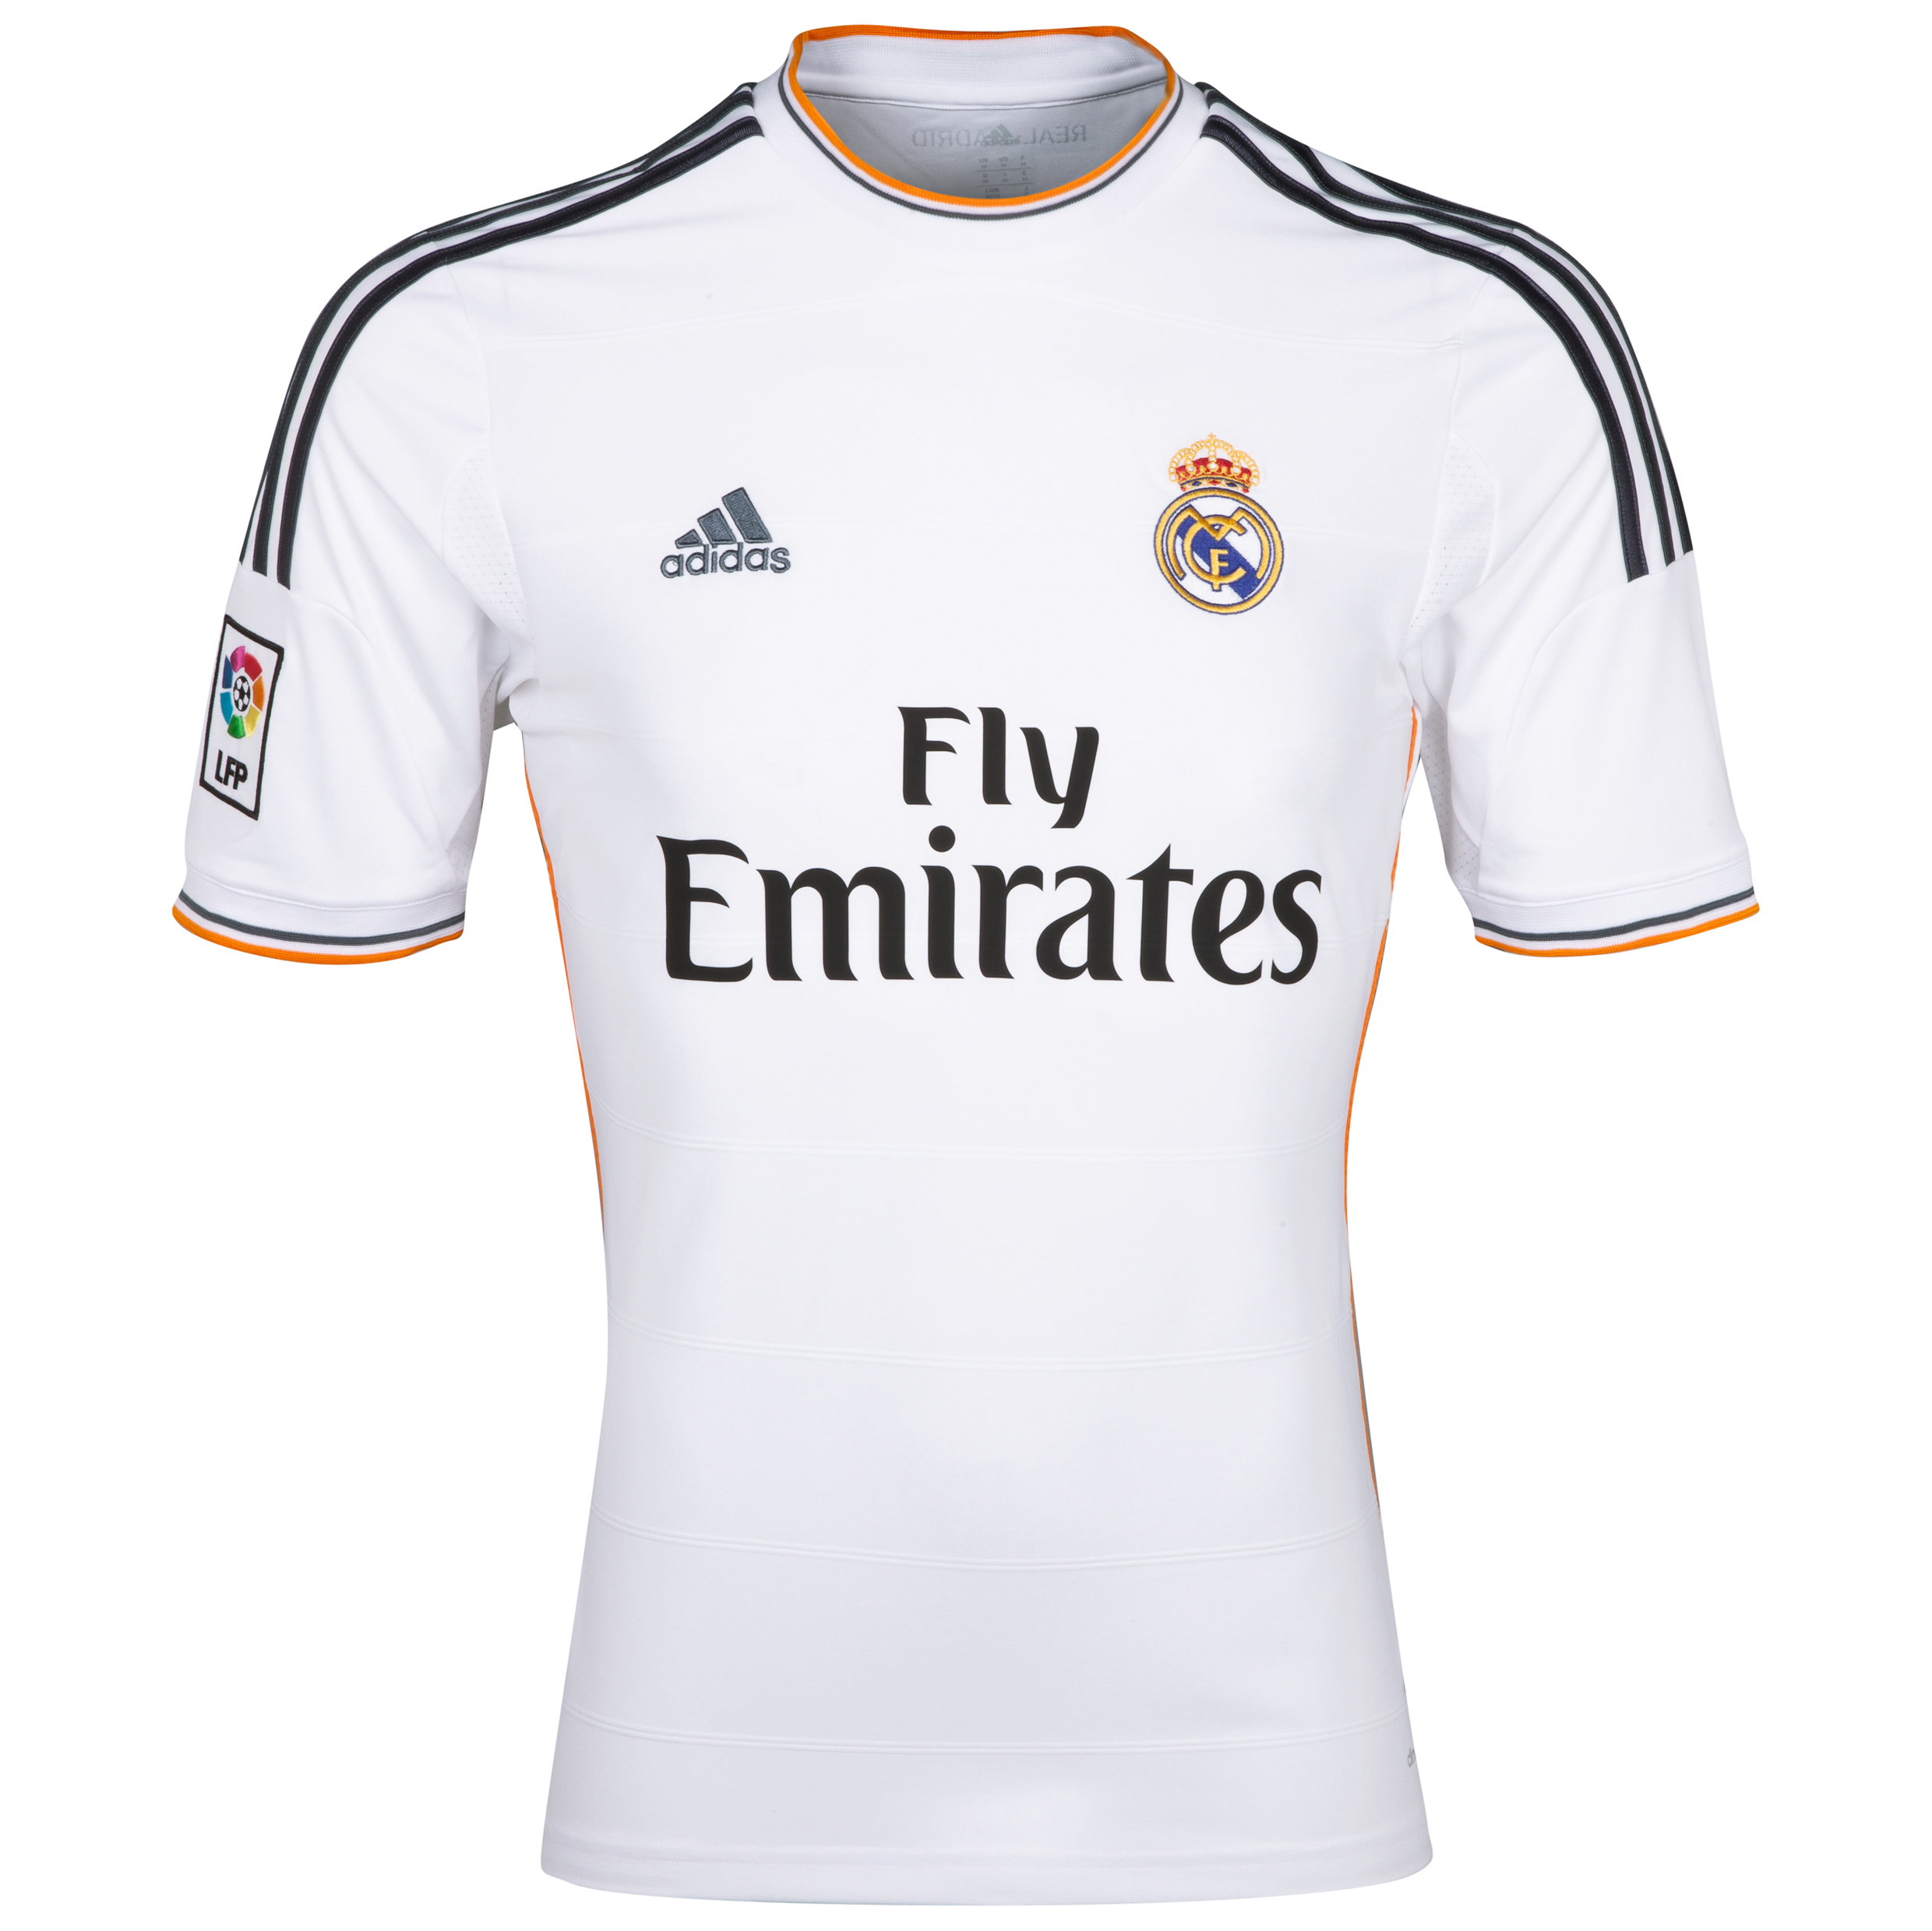 Real Madrid Home Shirt 2013/14